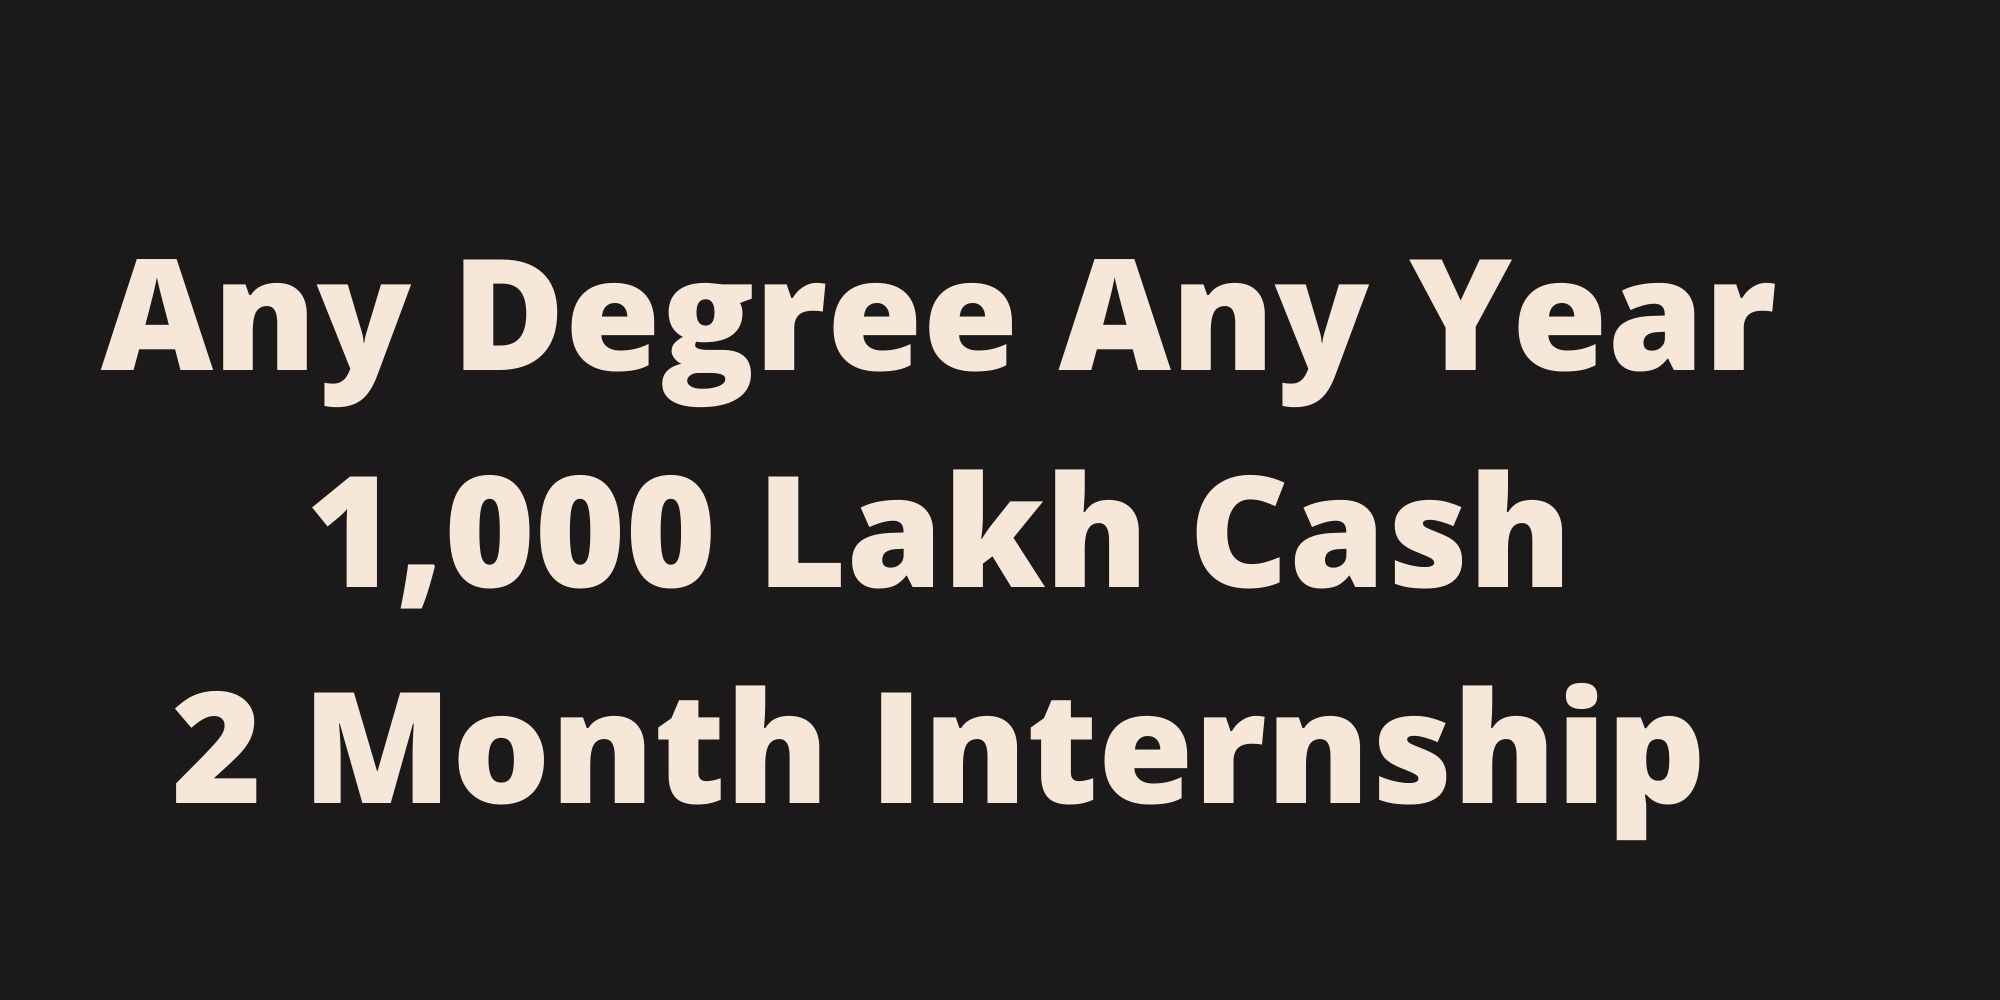 EY Internship 2022 2023 2024 batch 1 lakh 2 month internship